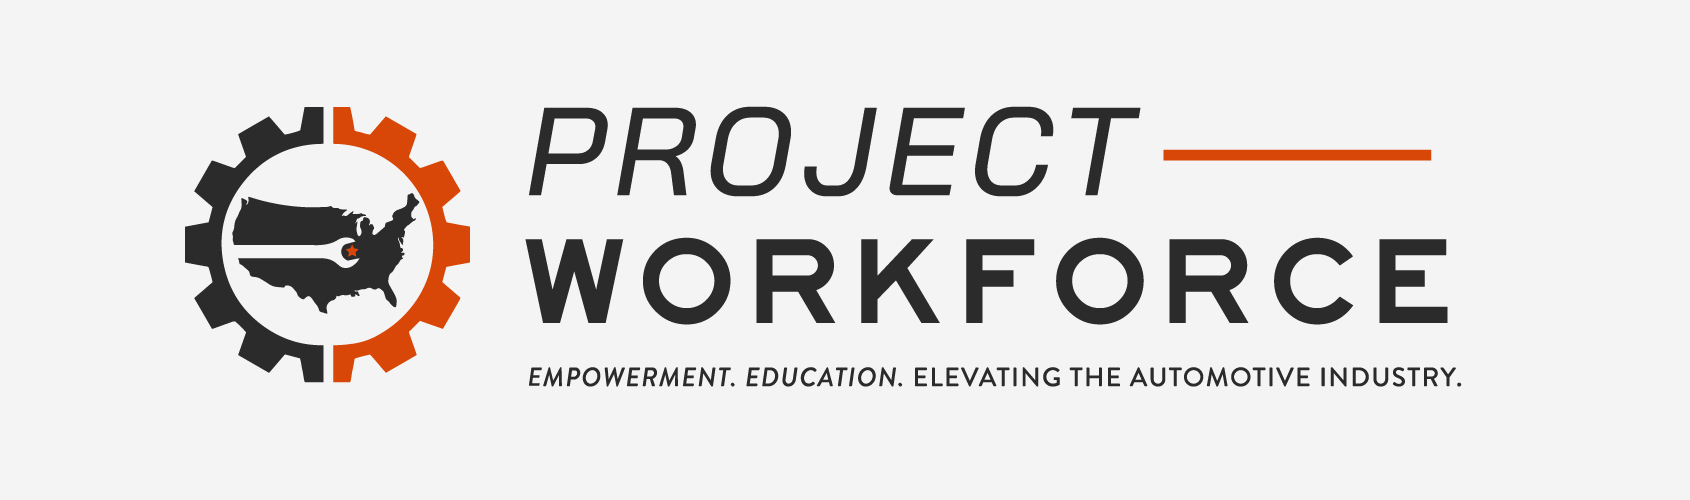 Project Workforce logo